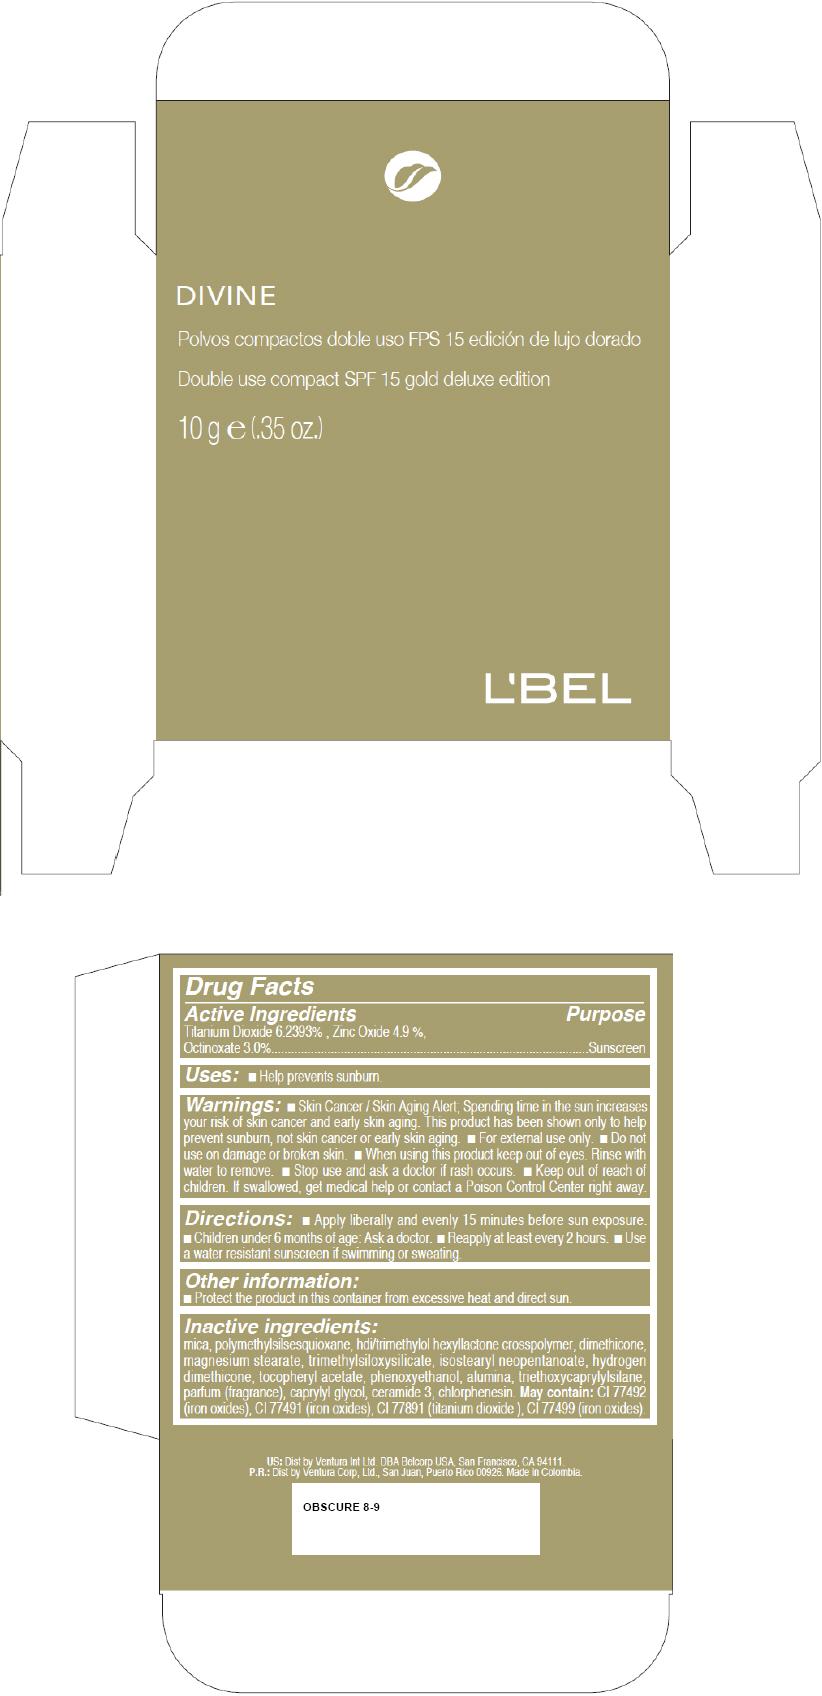 PRINCIPAL DISPLAY PANEL - 10 g Cartridge Box - Obscure 8-9